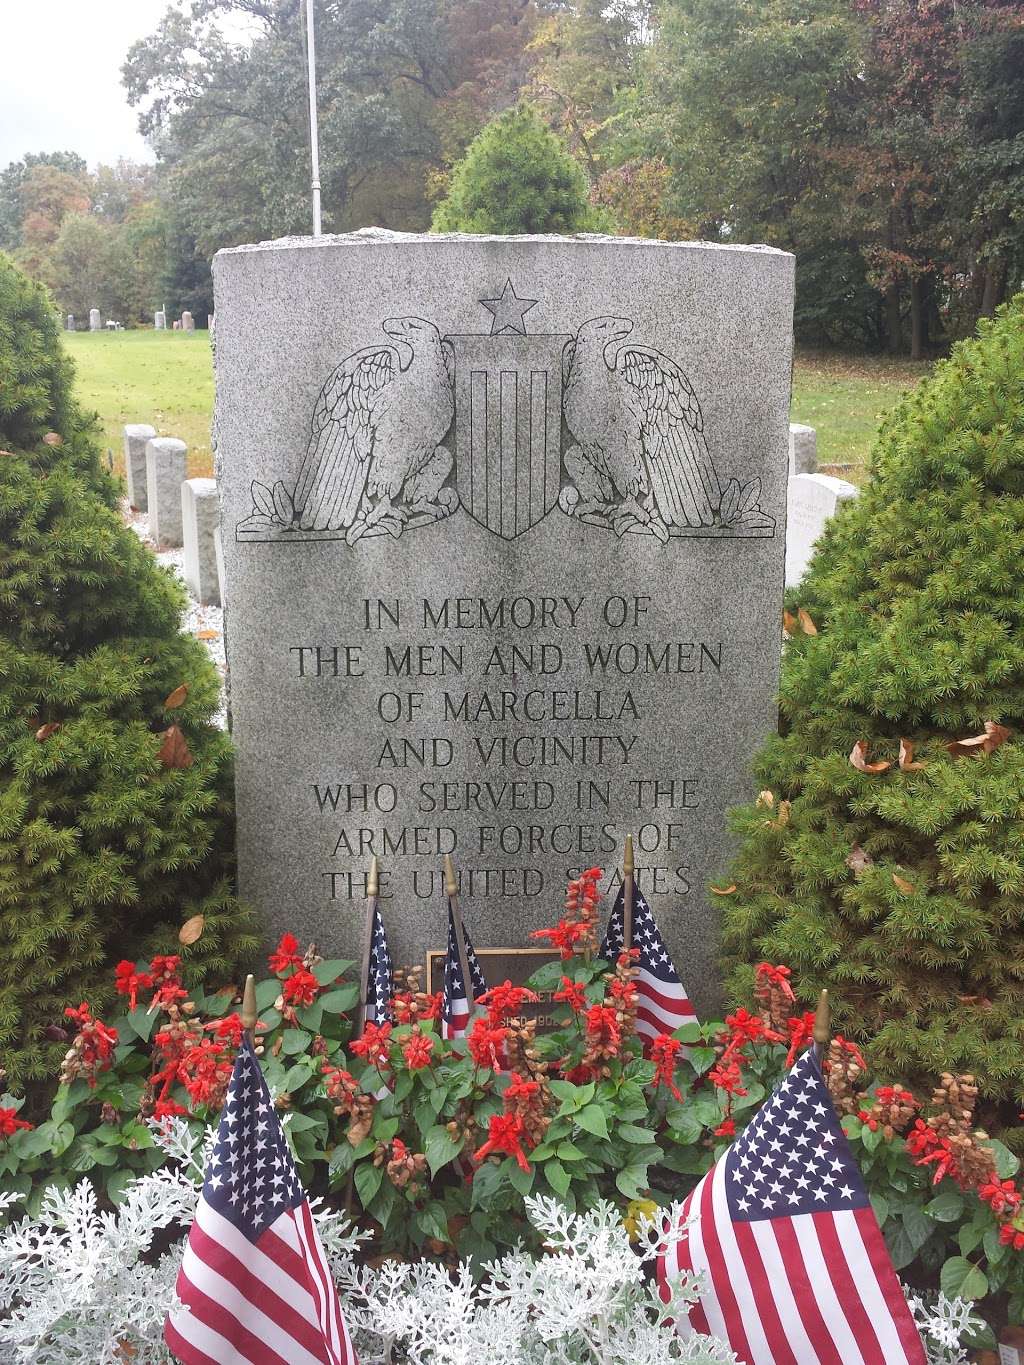 Marcella Union Cemetery | 28 Timberbrook Rd, Rockaway, NJ 07866